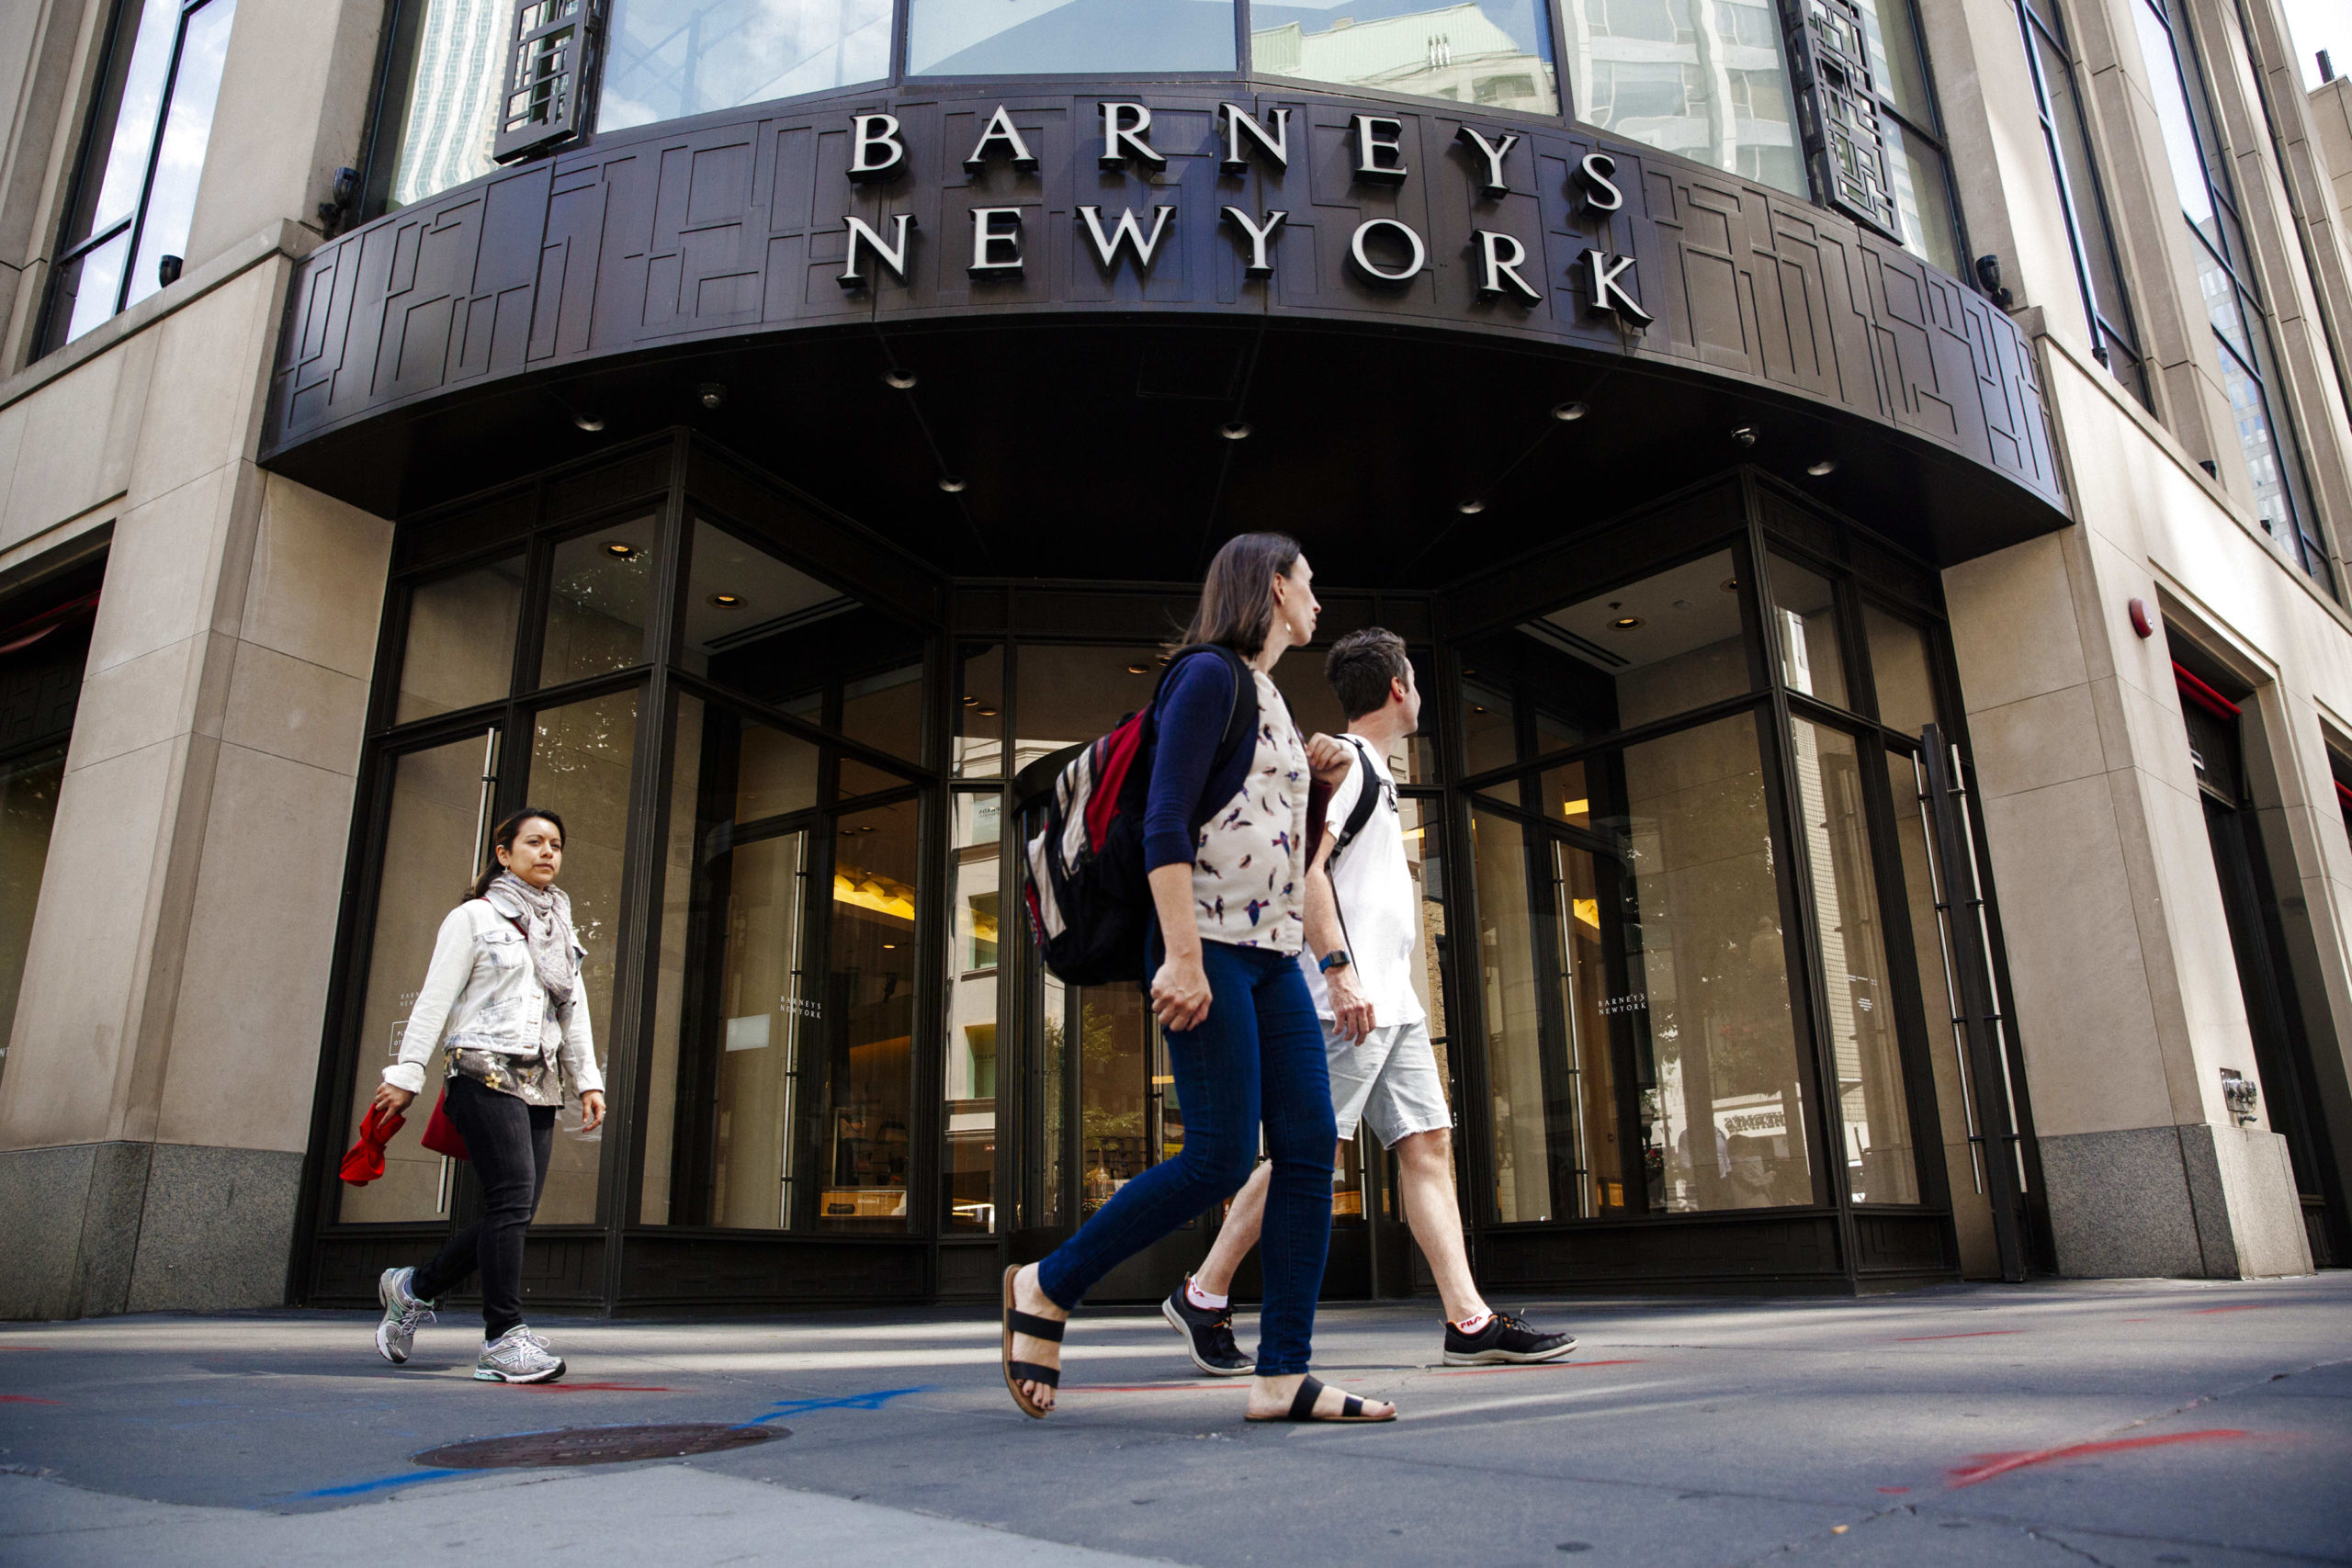 Barneys NY Finally Shutters its Doors After Prolonged Liquidation - The